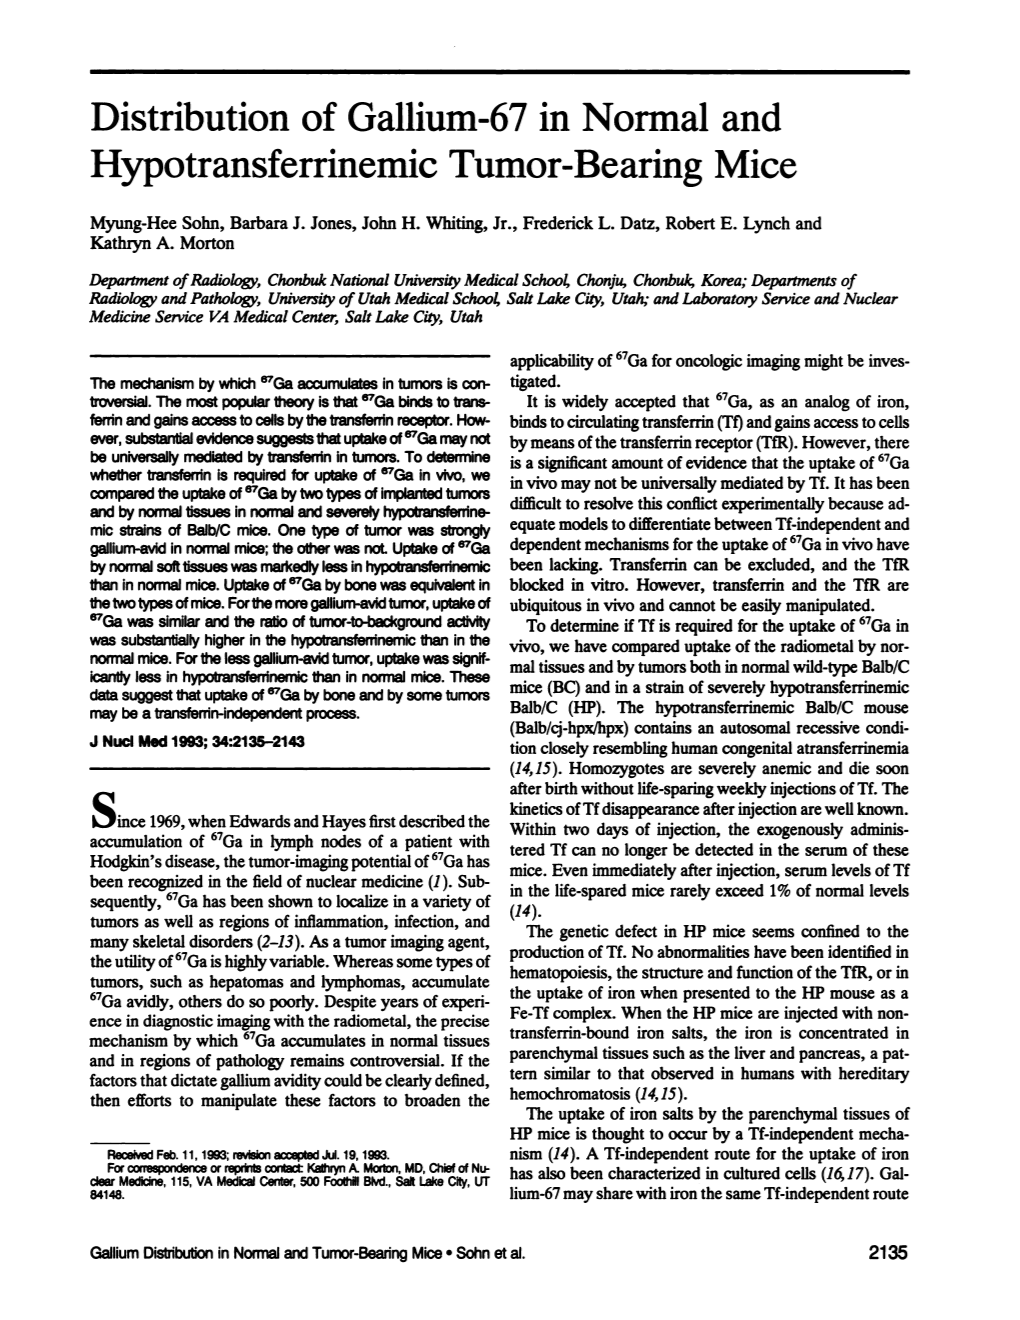 Distribution of Gallium-67 in Normal and Hypotransferrinemic Tumor-Bearing Mice